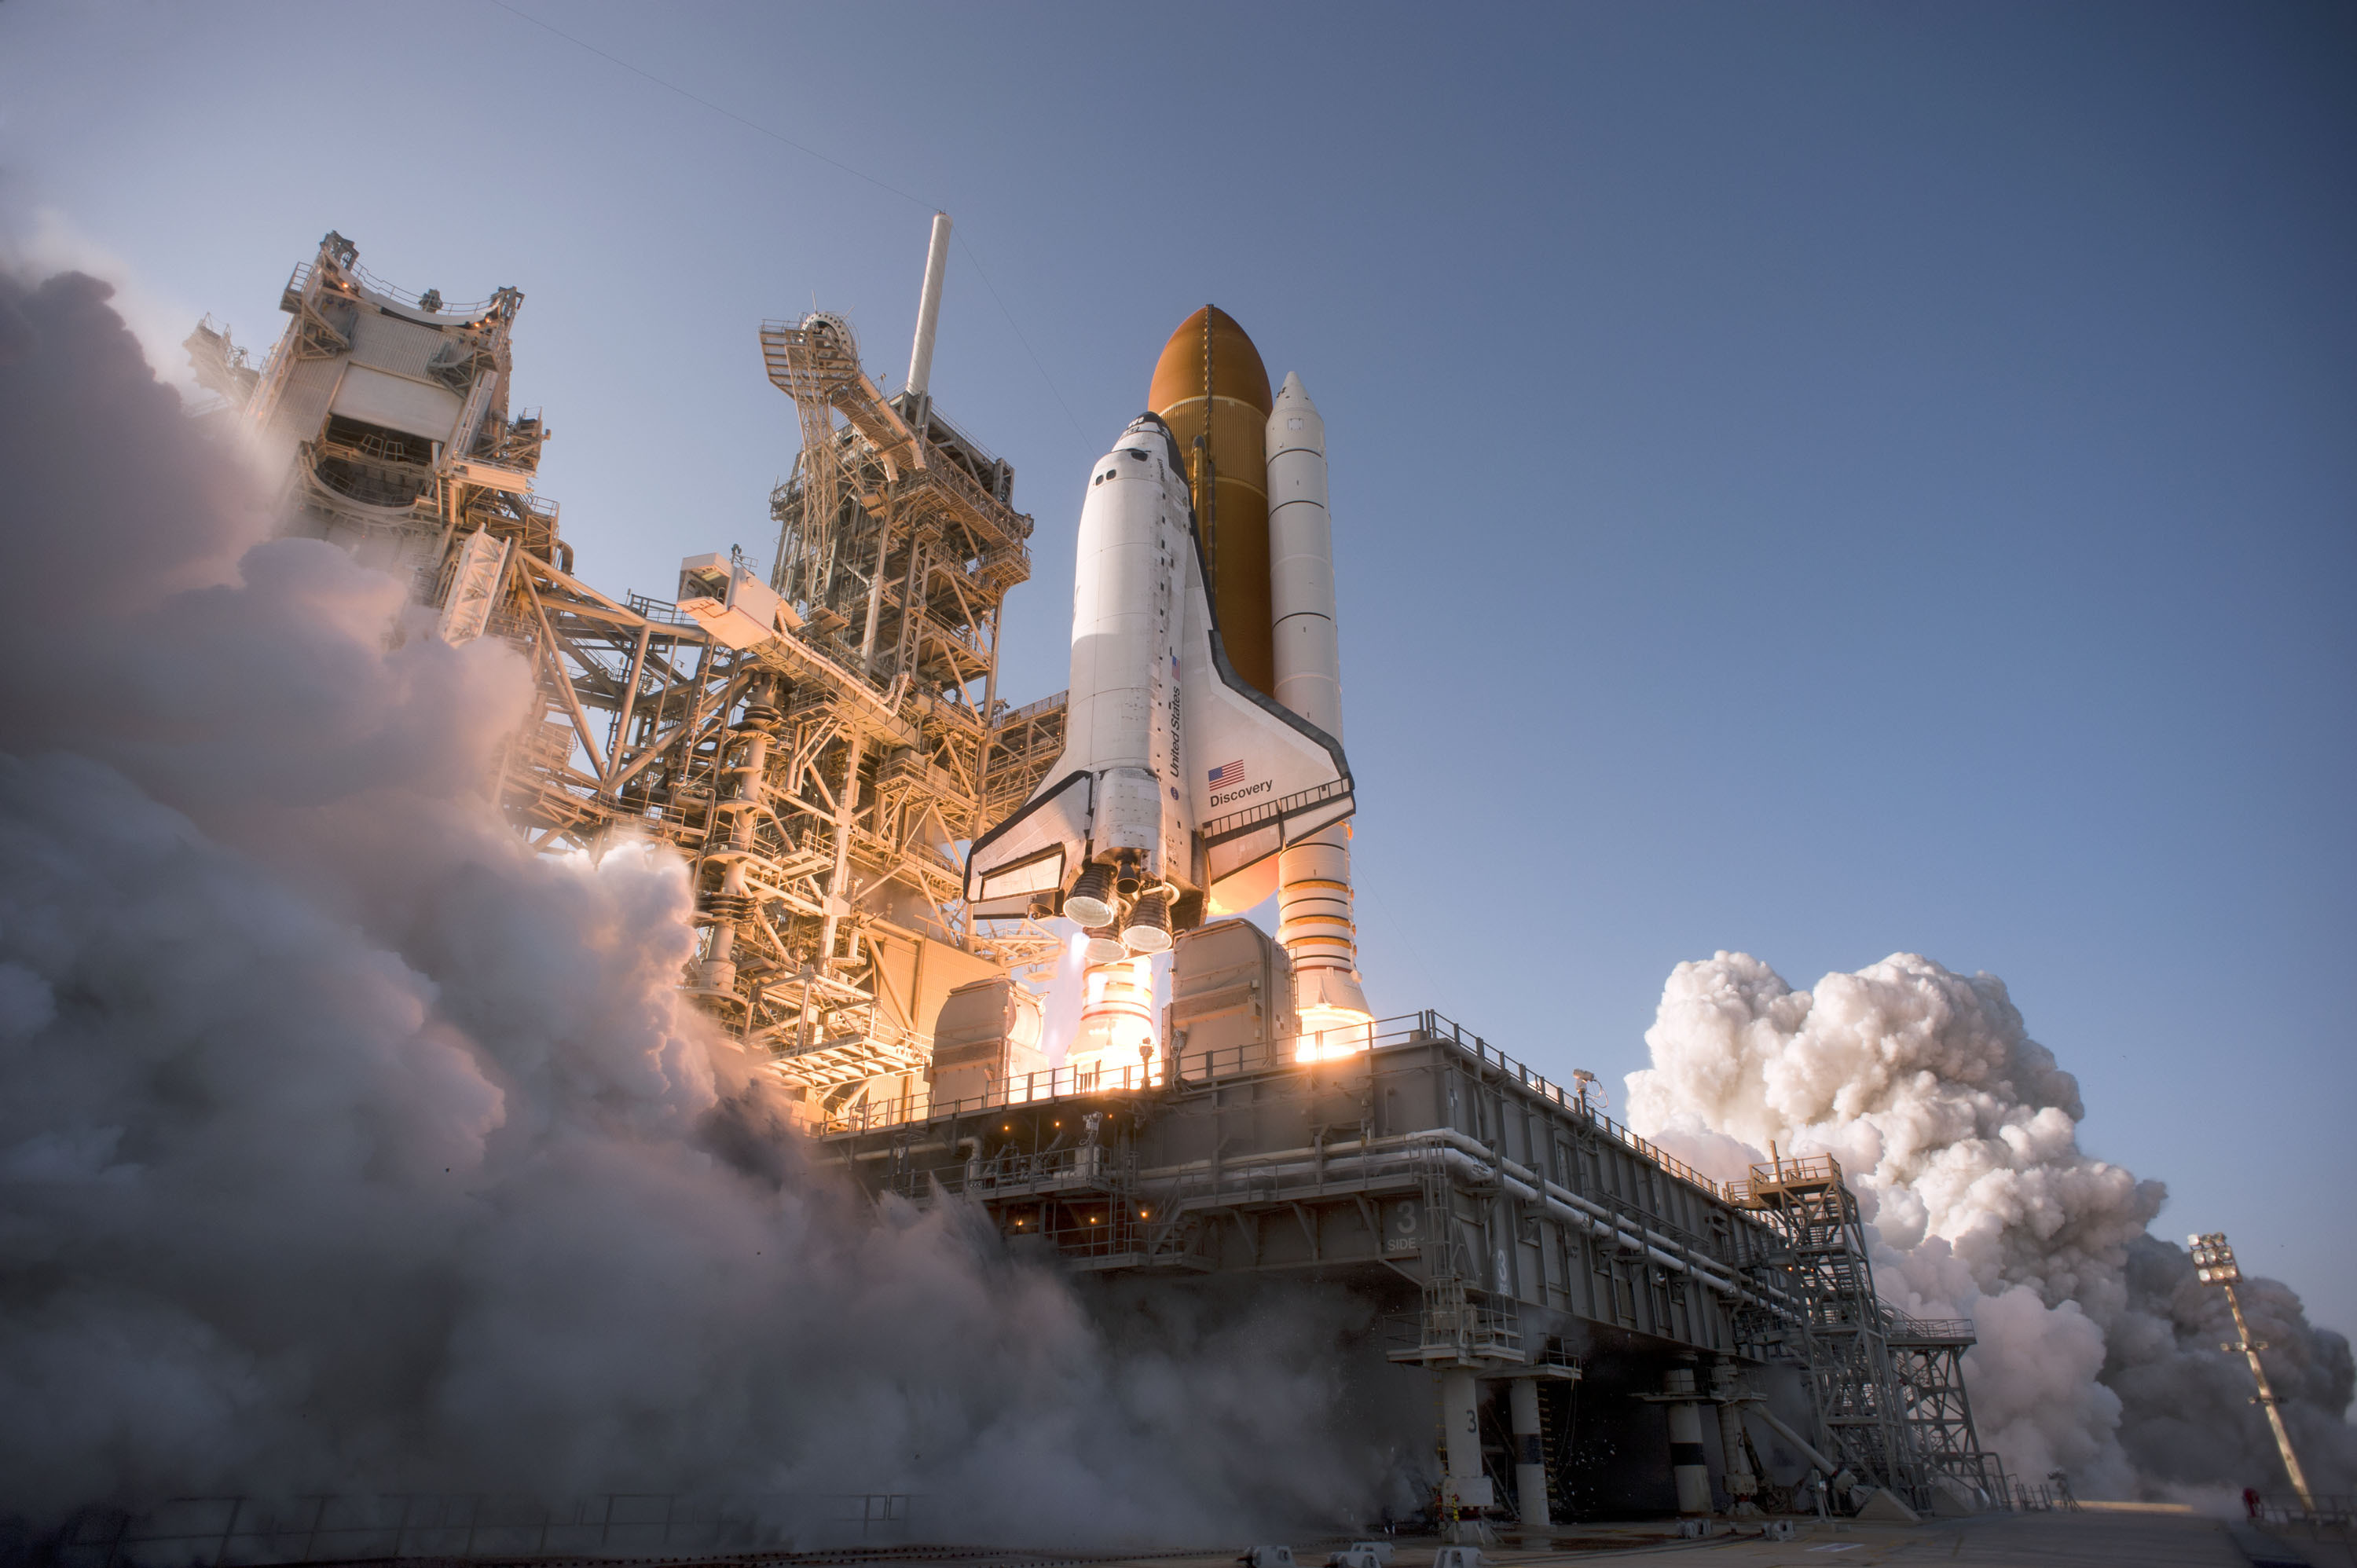 nasa space shuttle program ends